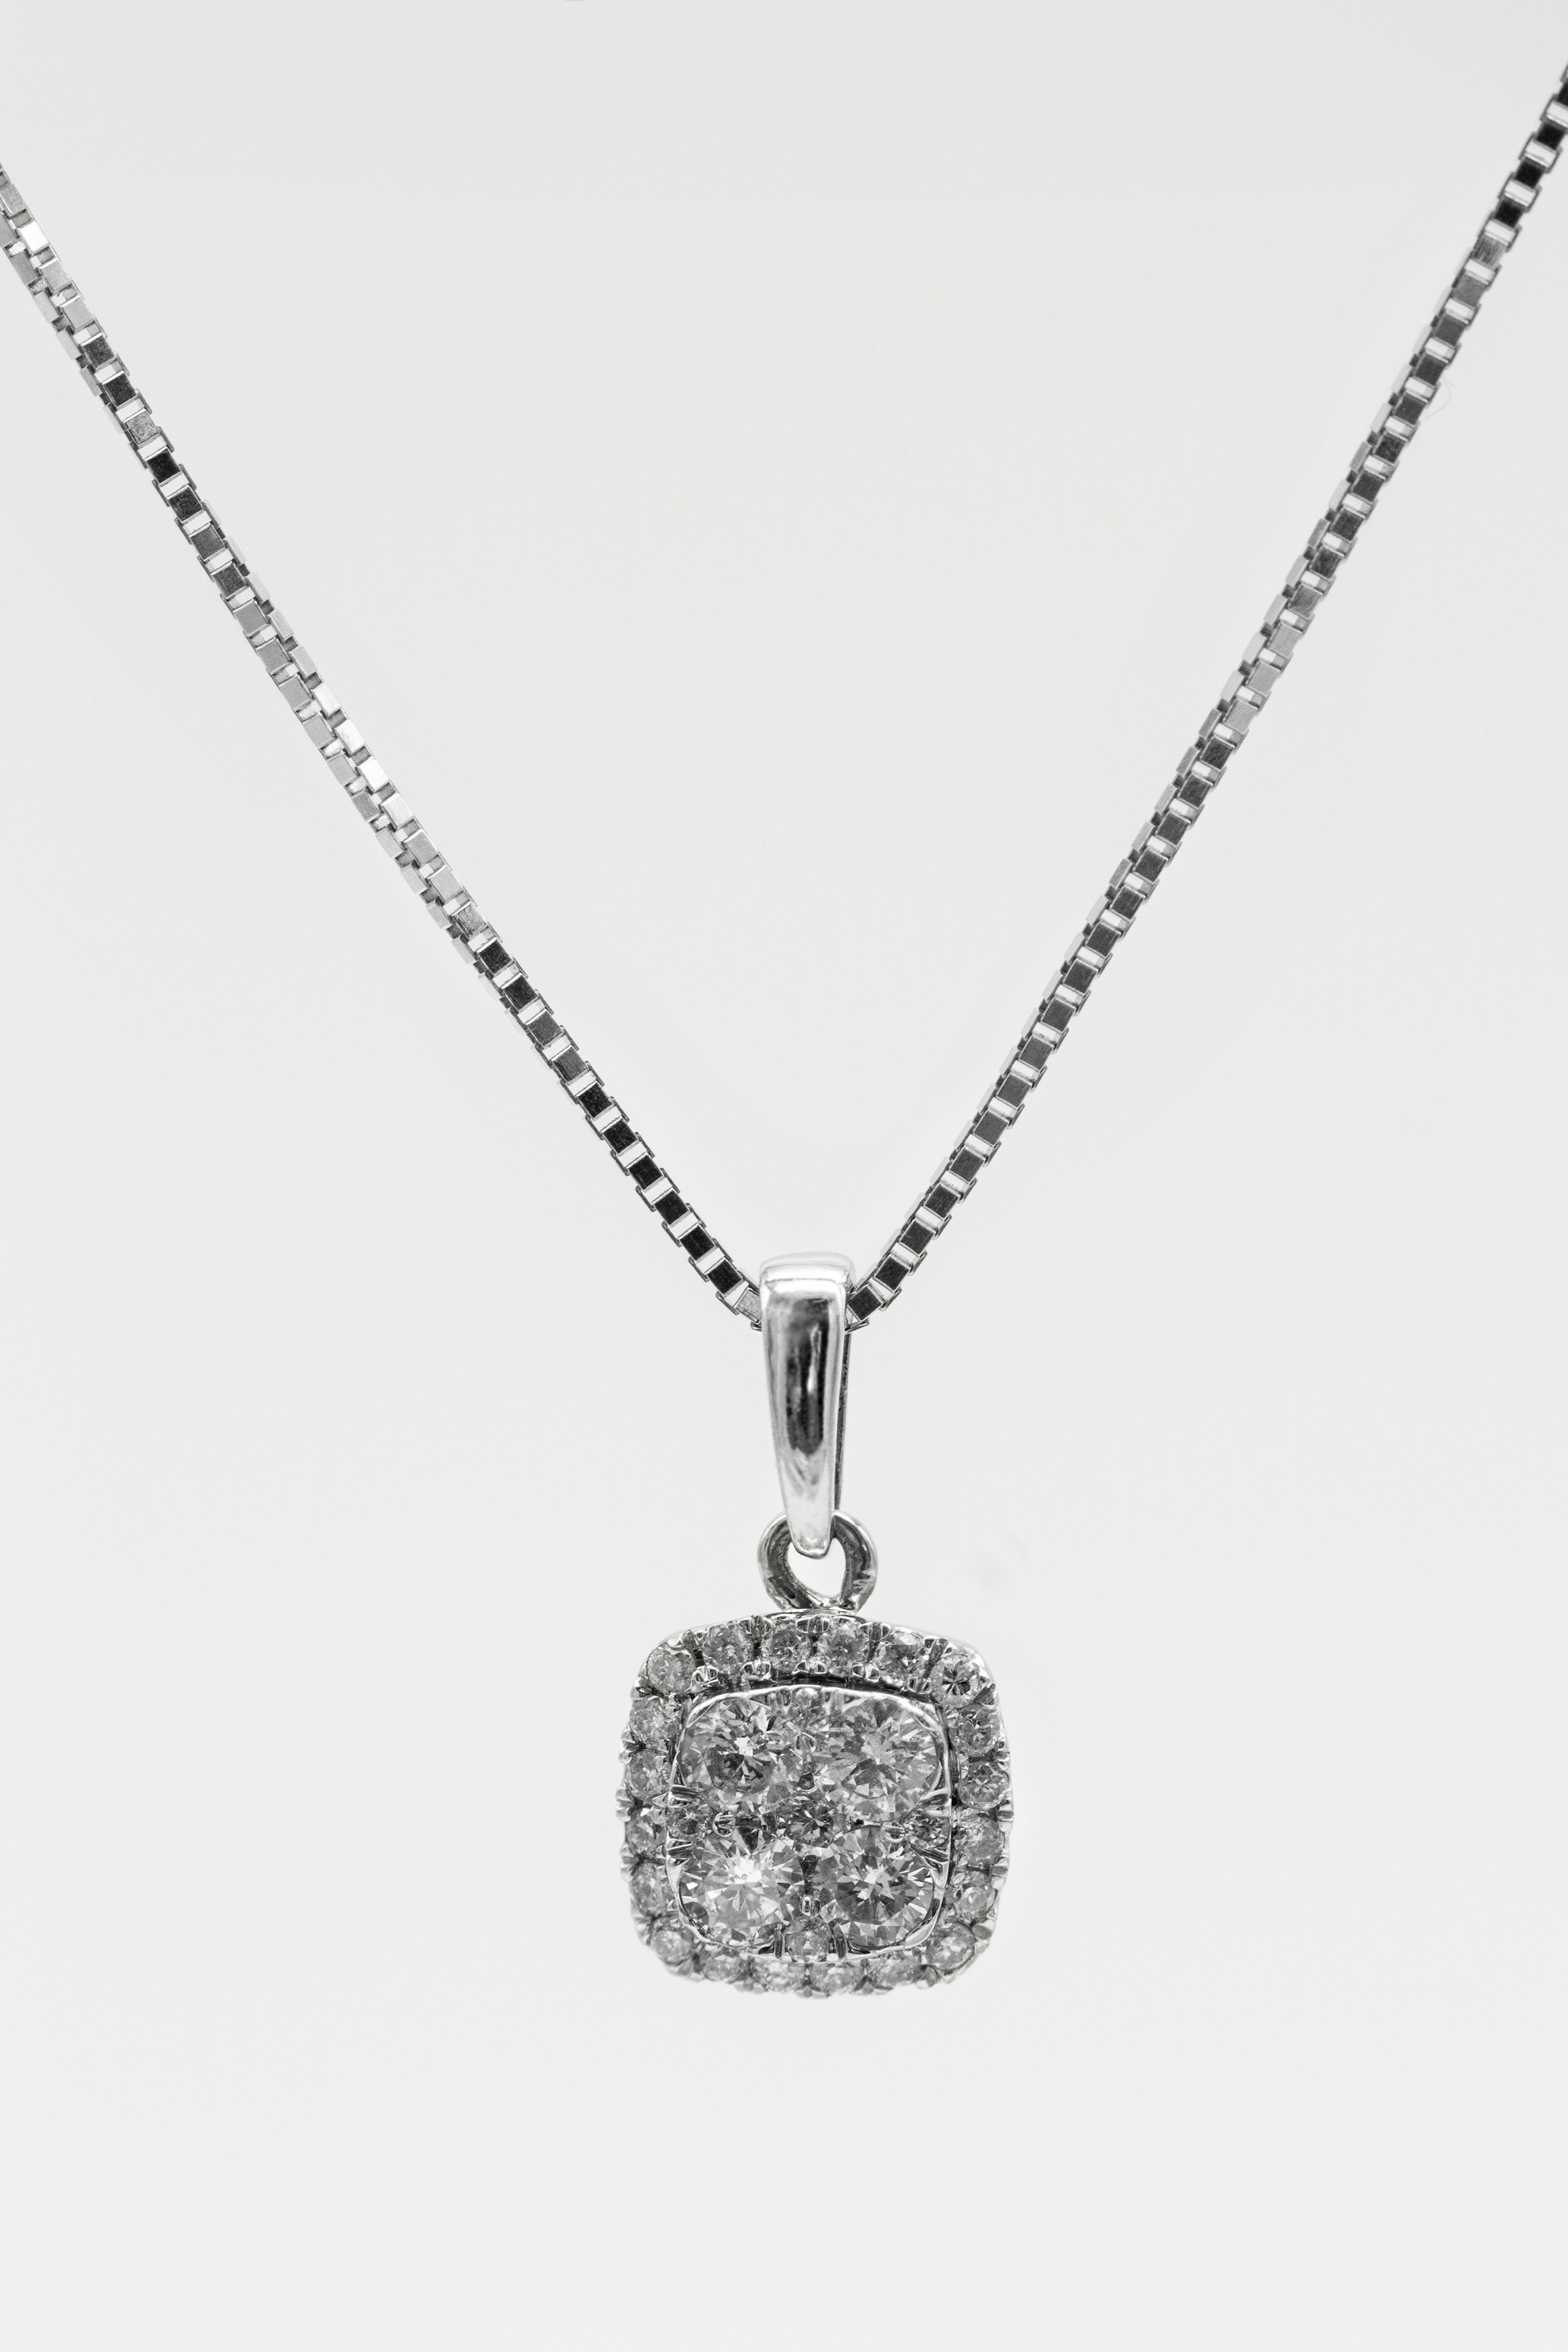 A diamond necklace | Source: Unsplash